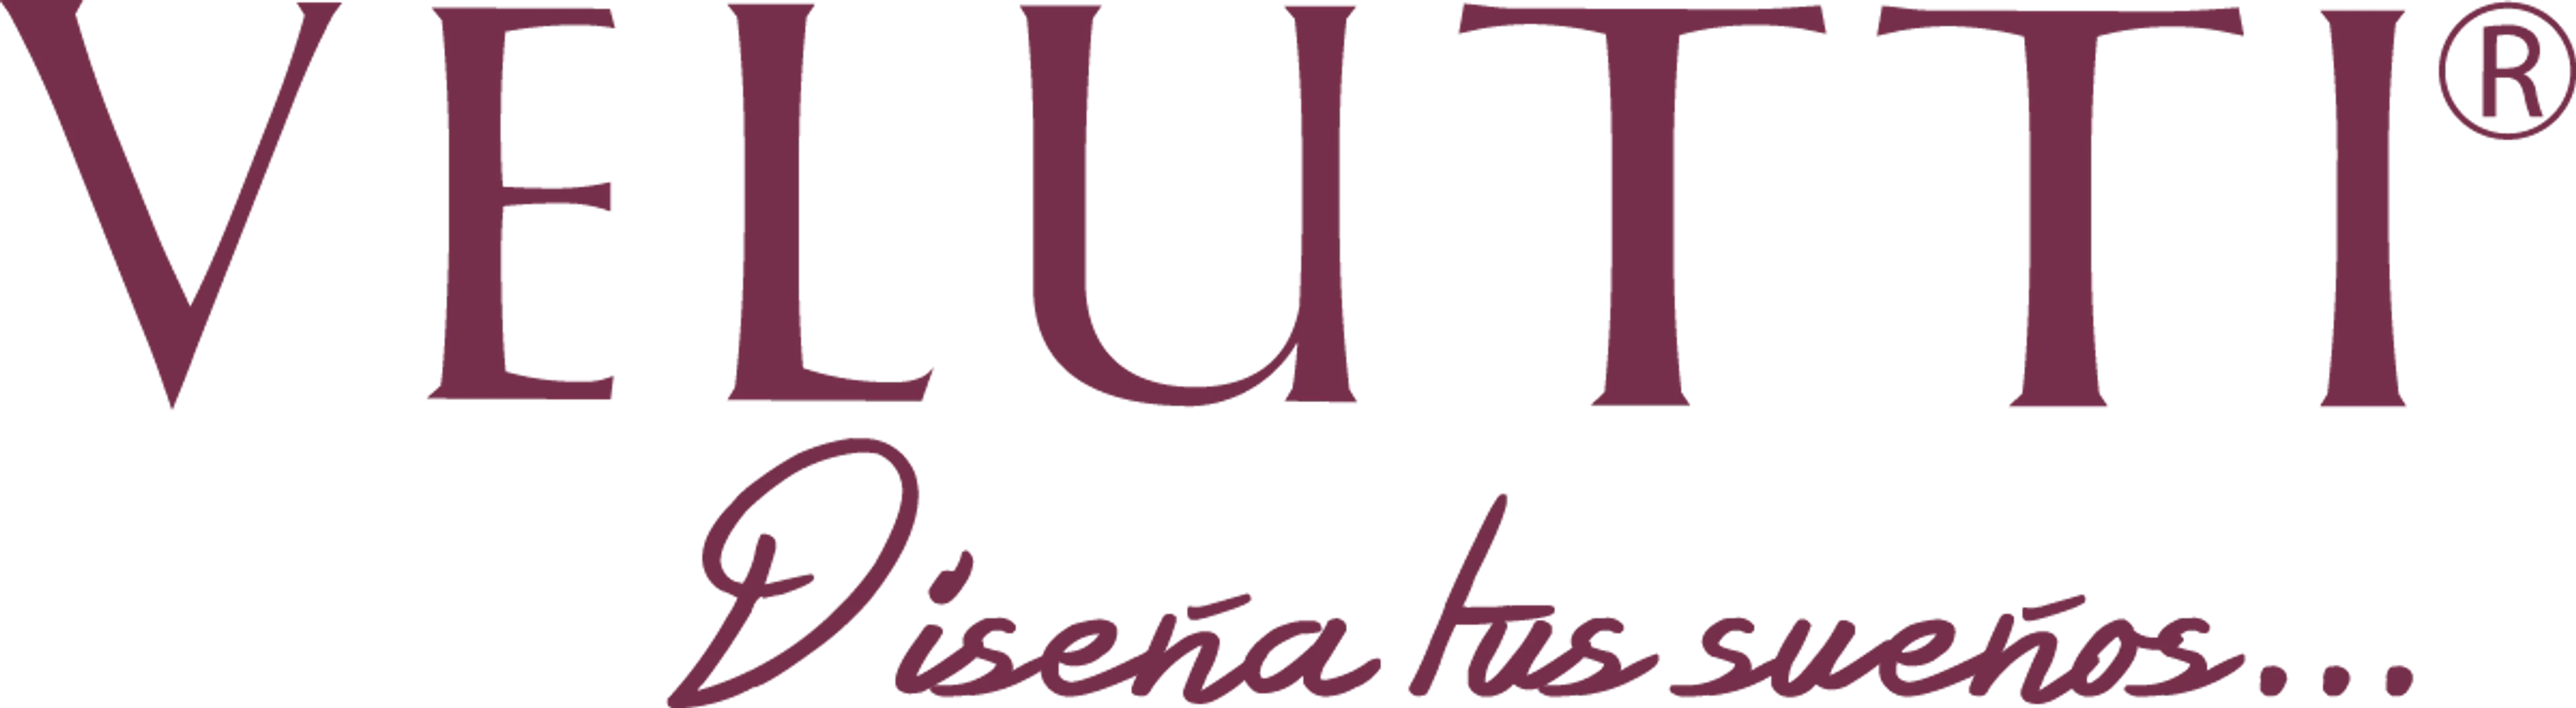 VELUTTI logo